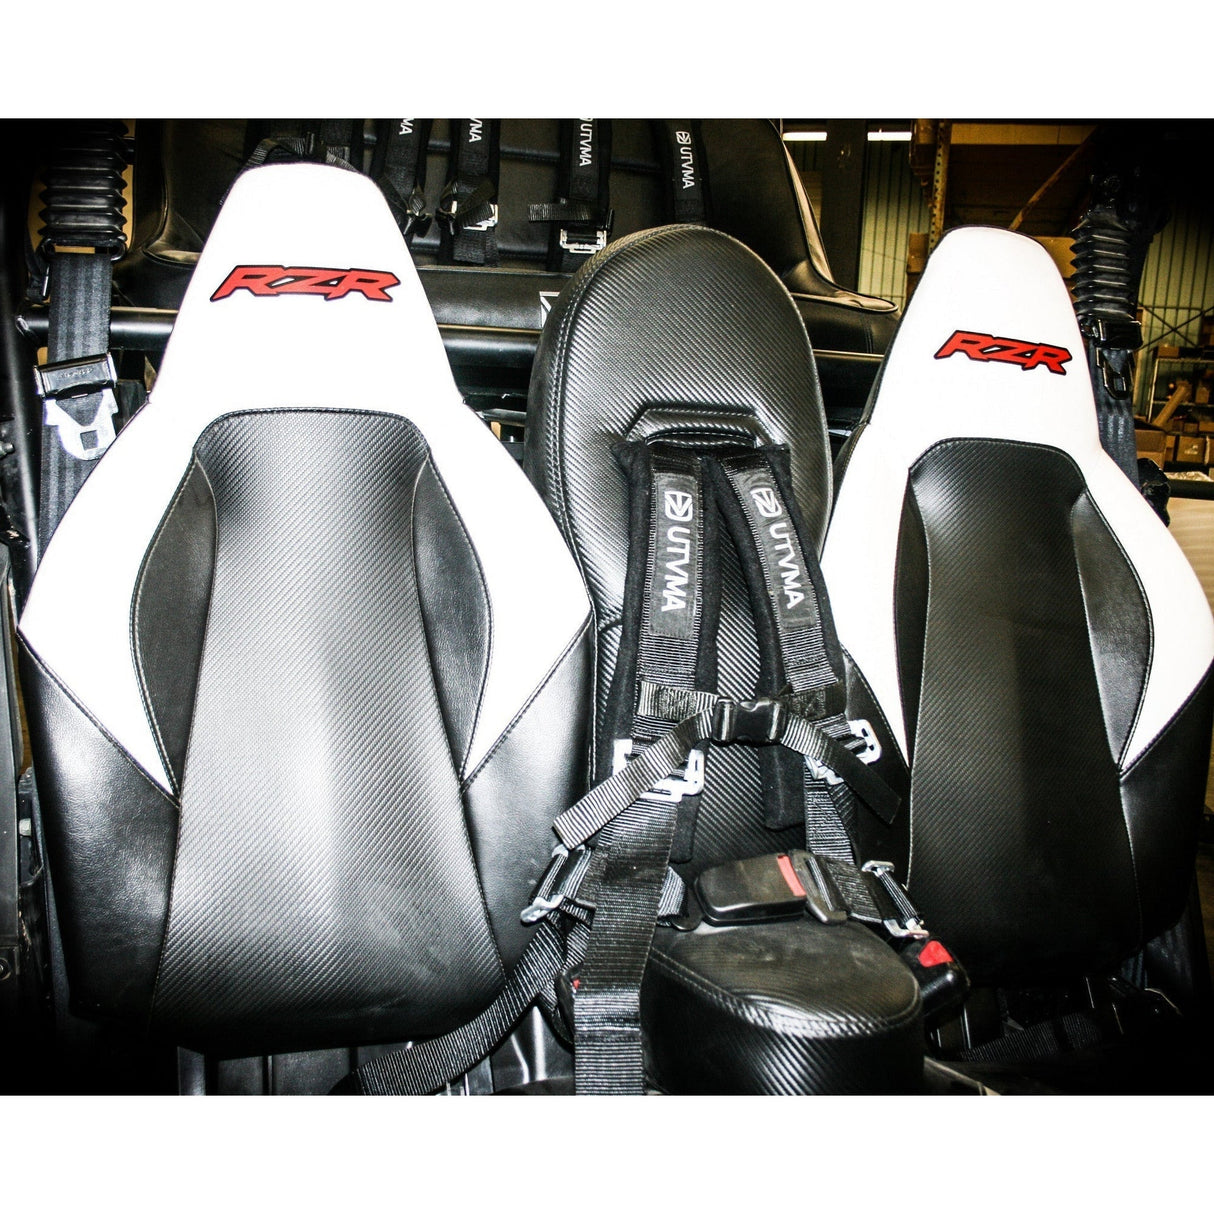 Polaris RZR 800 Bump Seat with Harness